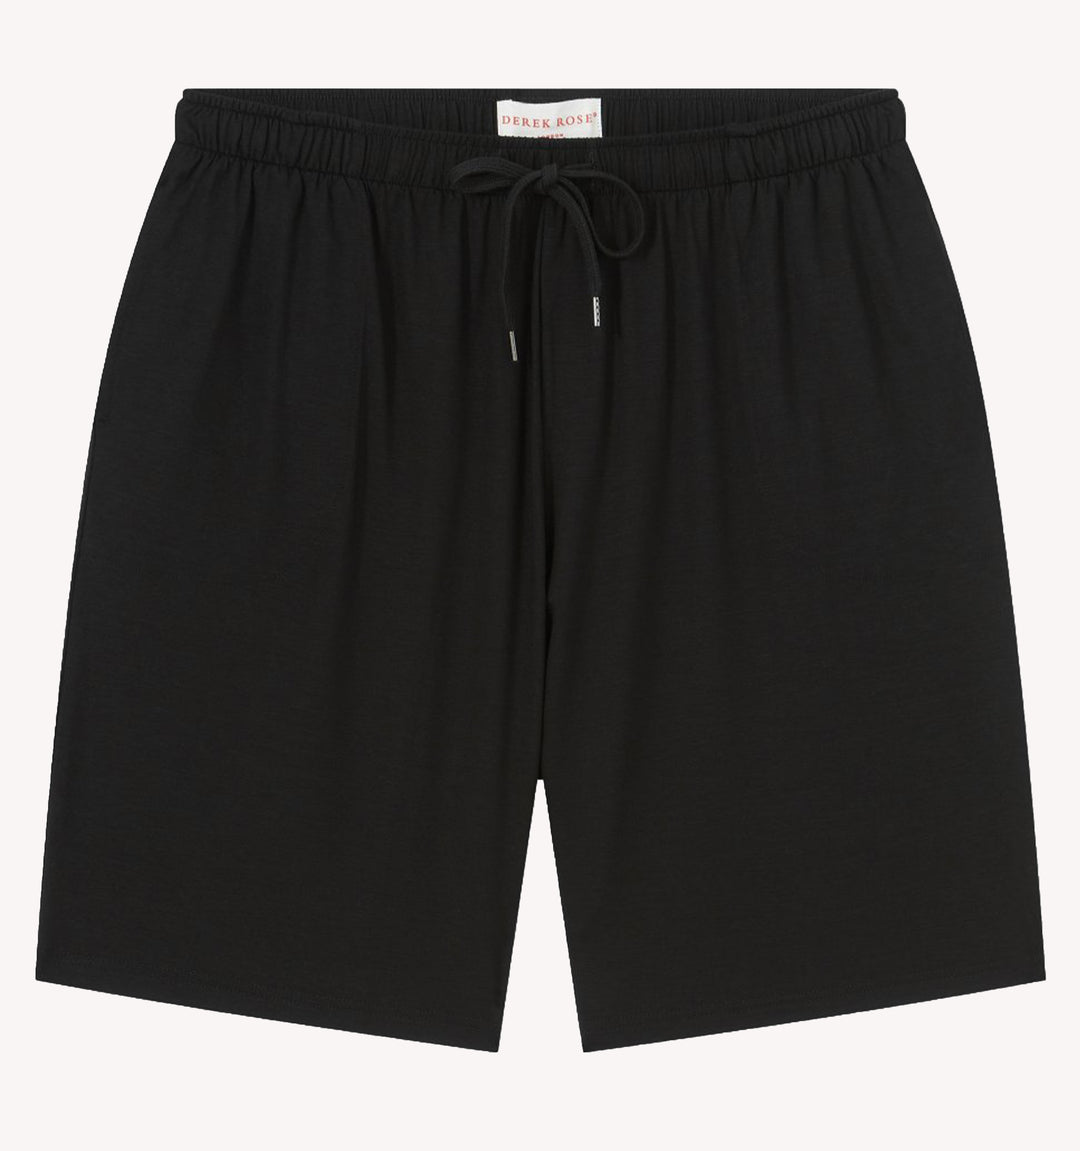 Derek Rose Basel Jersey Shorts in Black